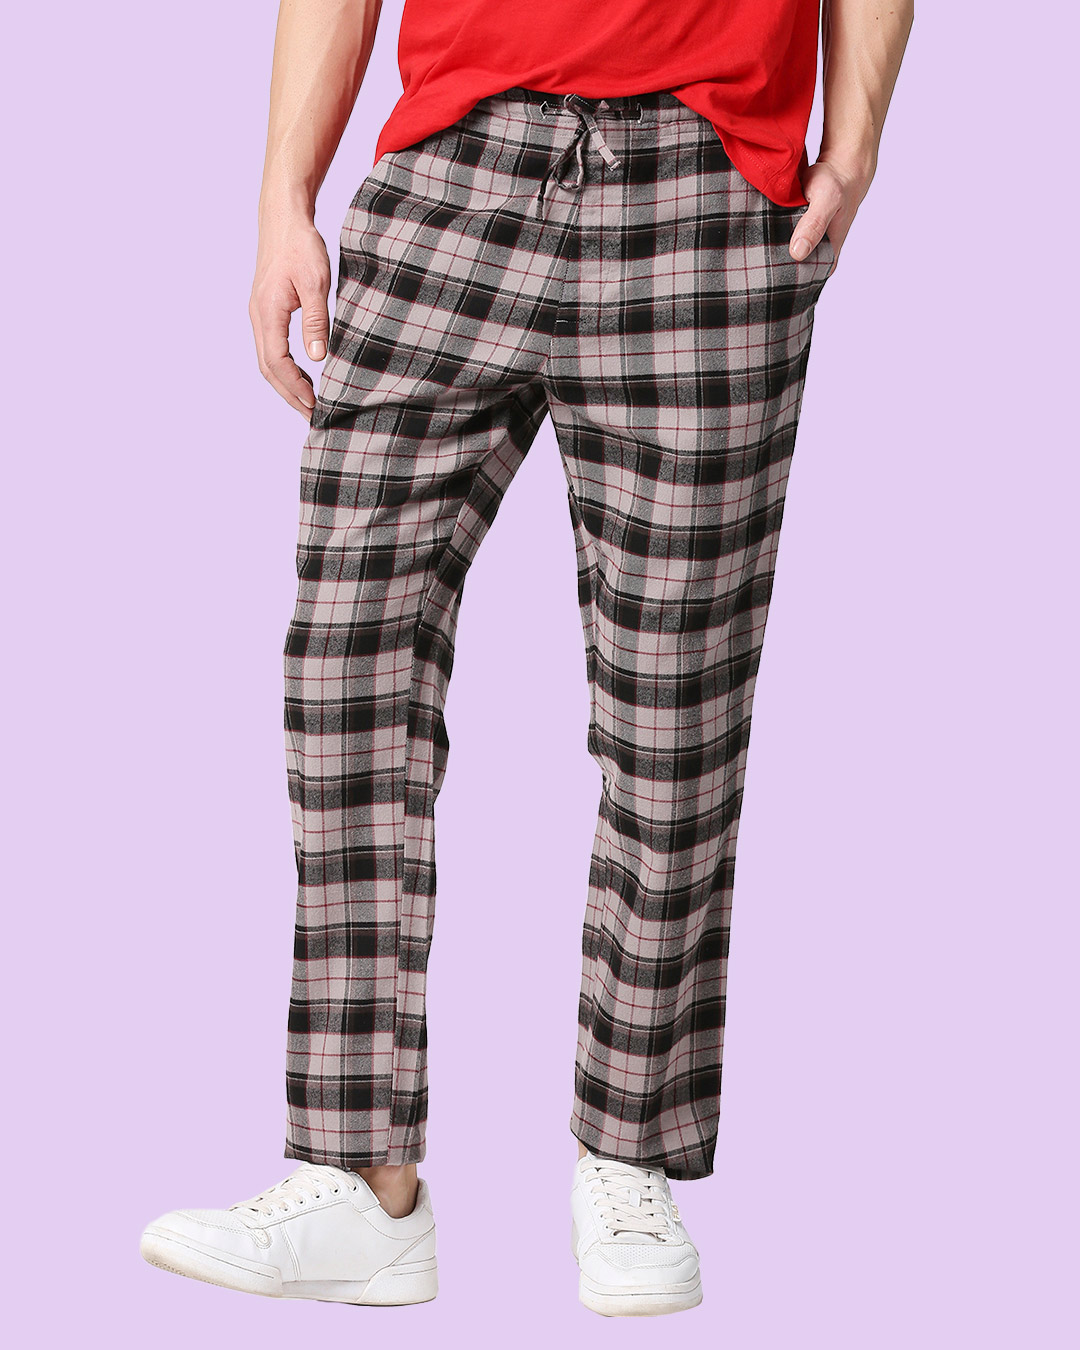 Buy Men's Checks Pyjamas Online in India at Bewakoof